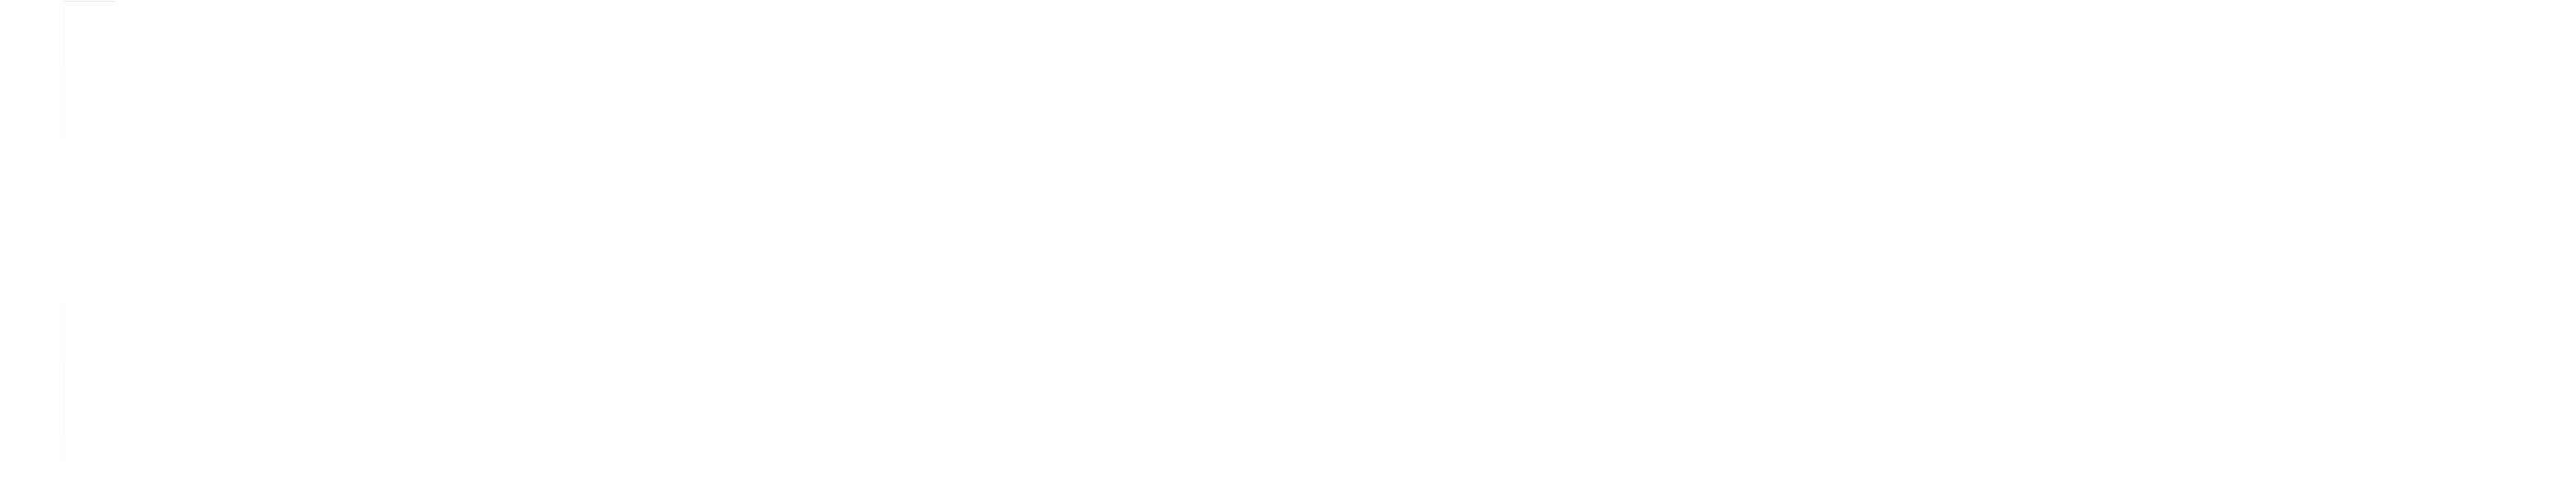 Kantar_White-Logo